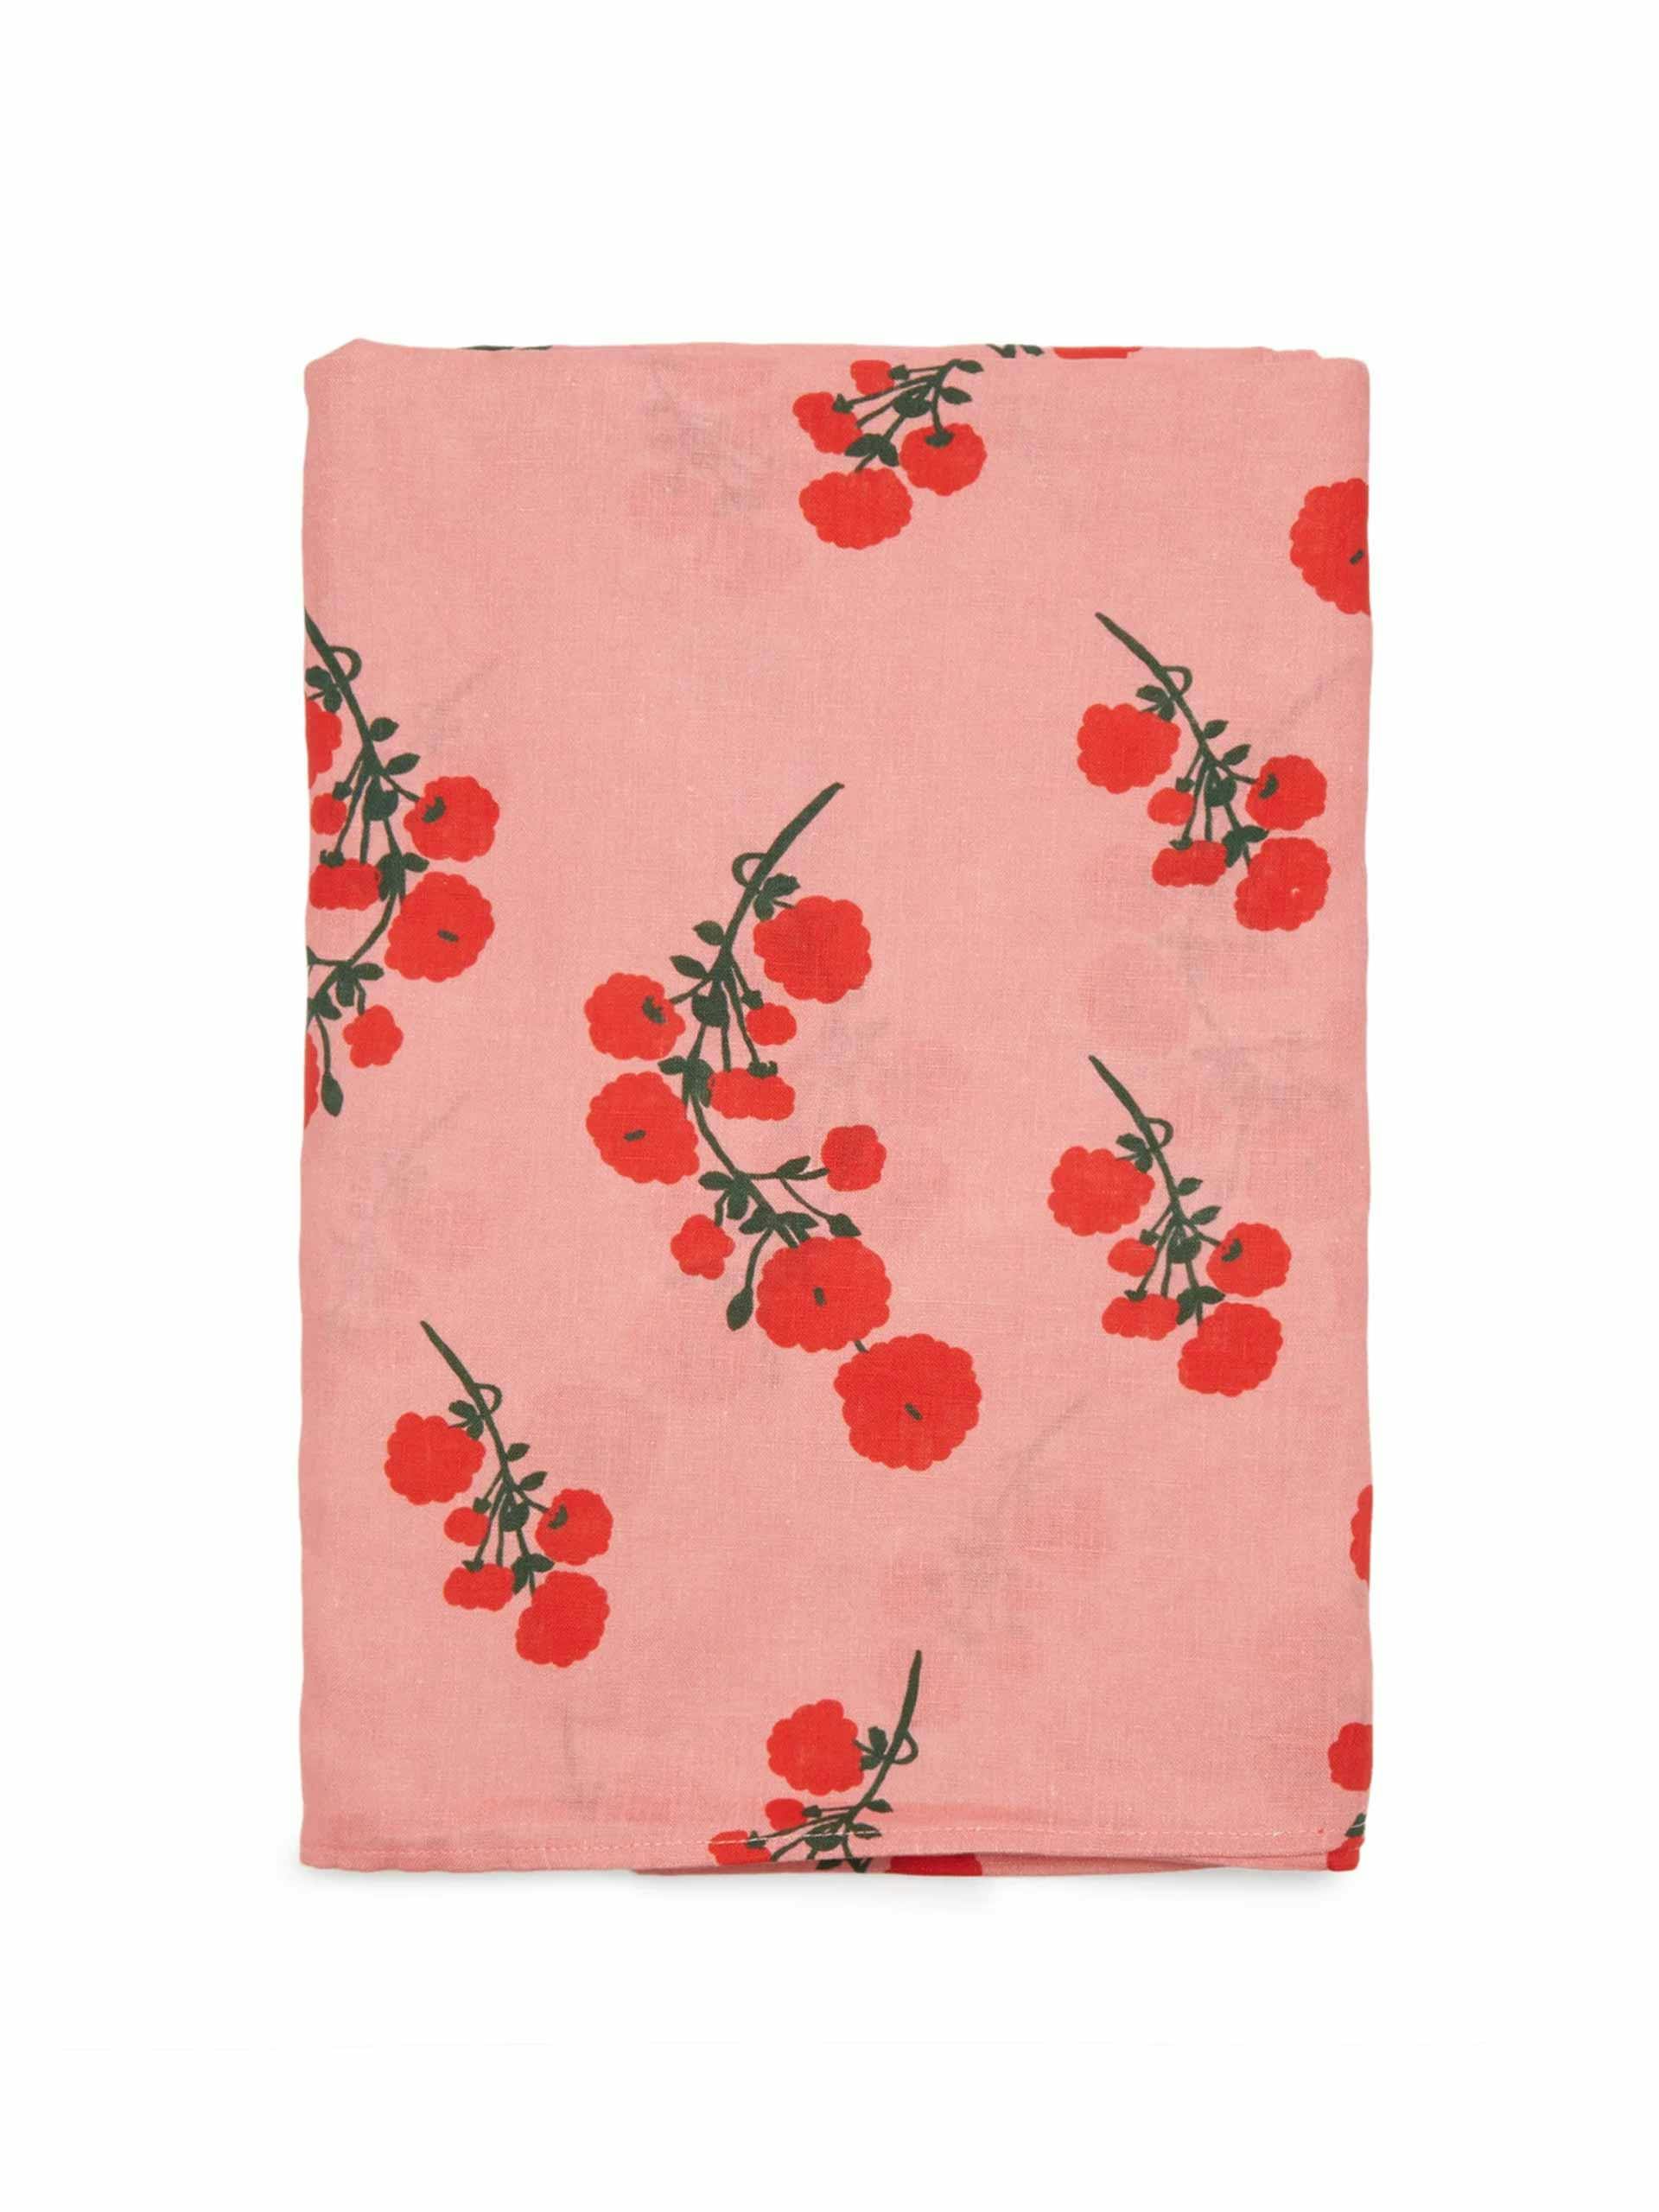 Red blossom linen napkin set